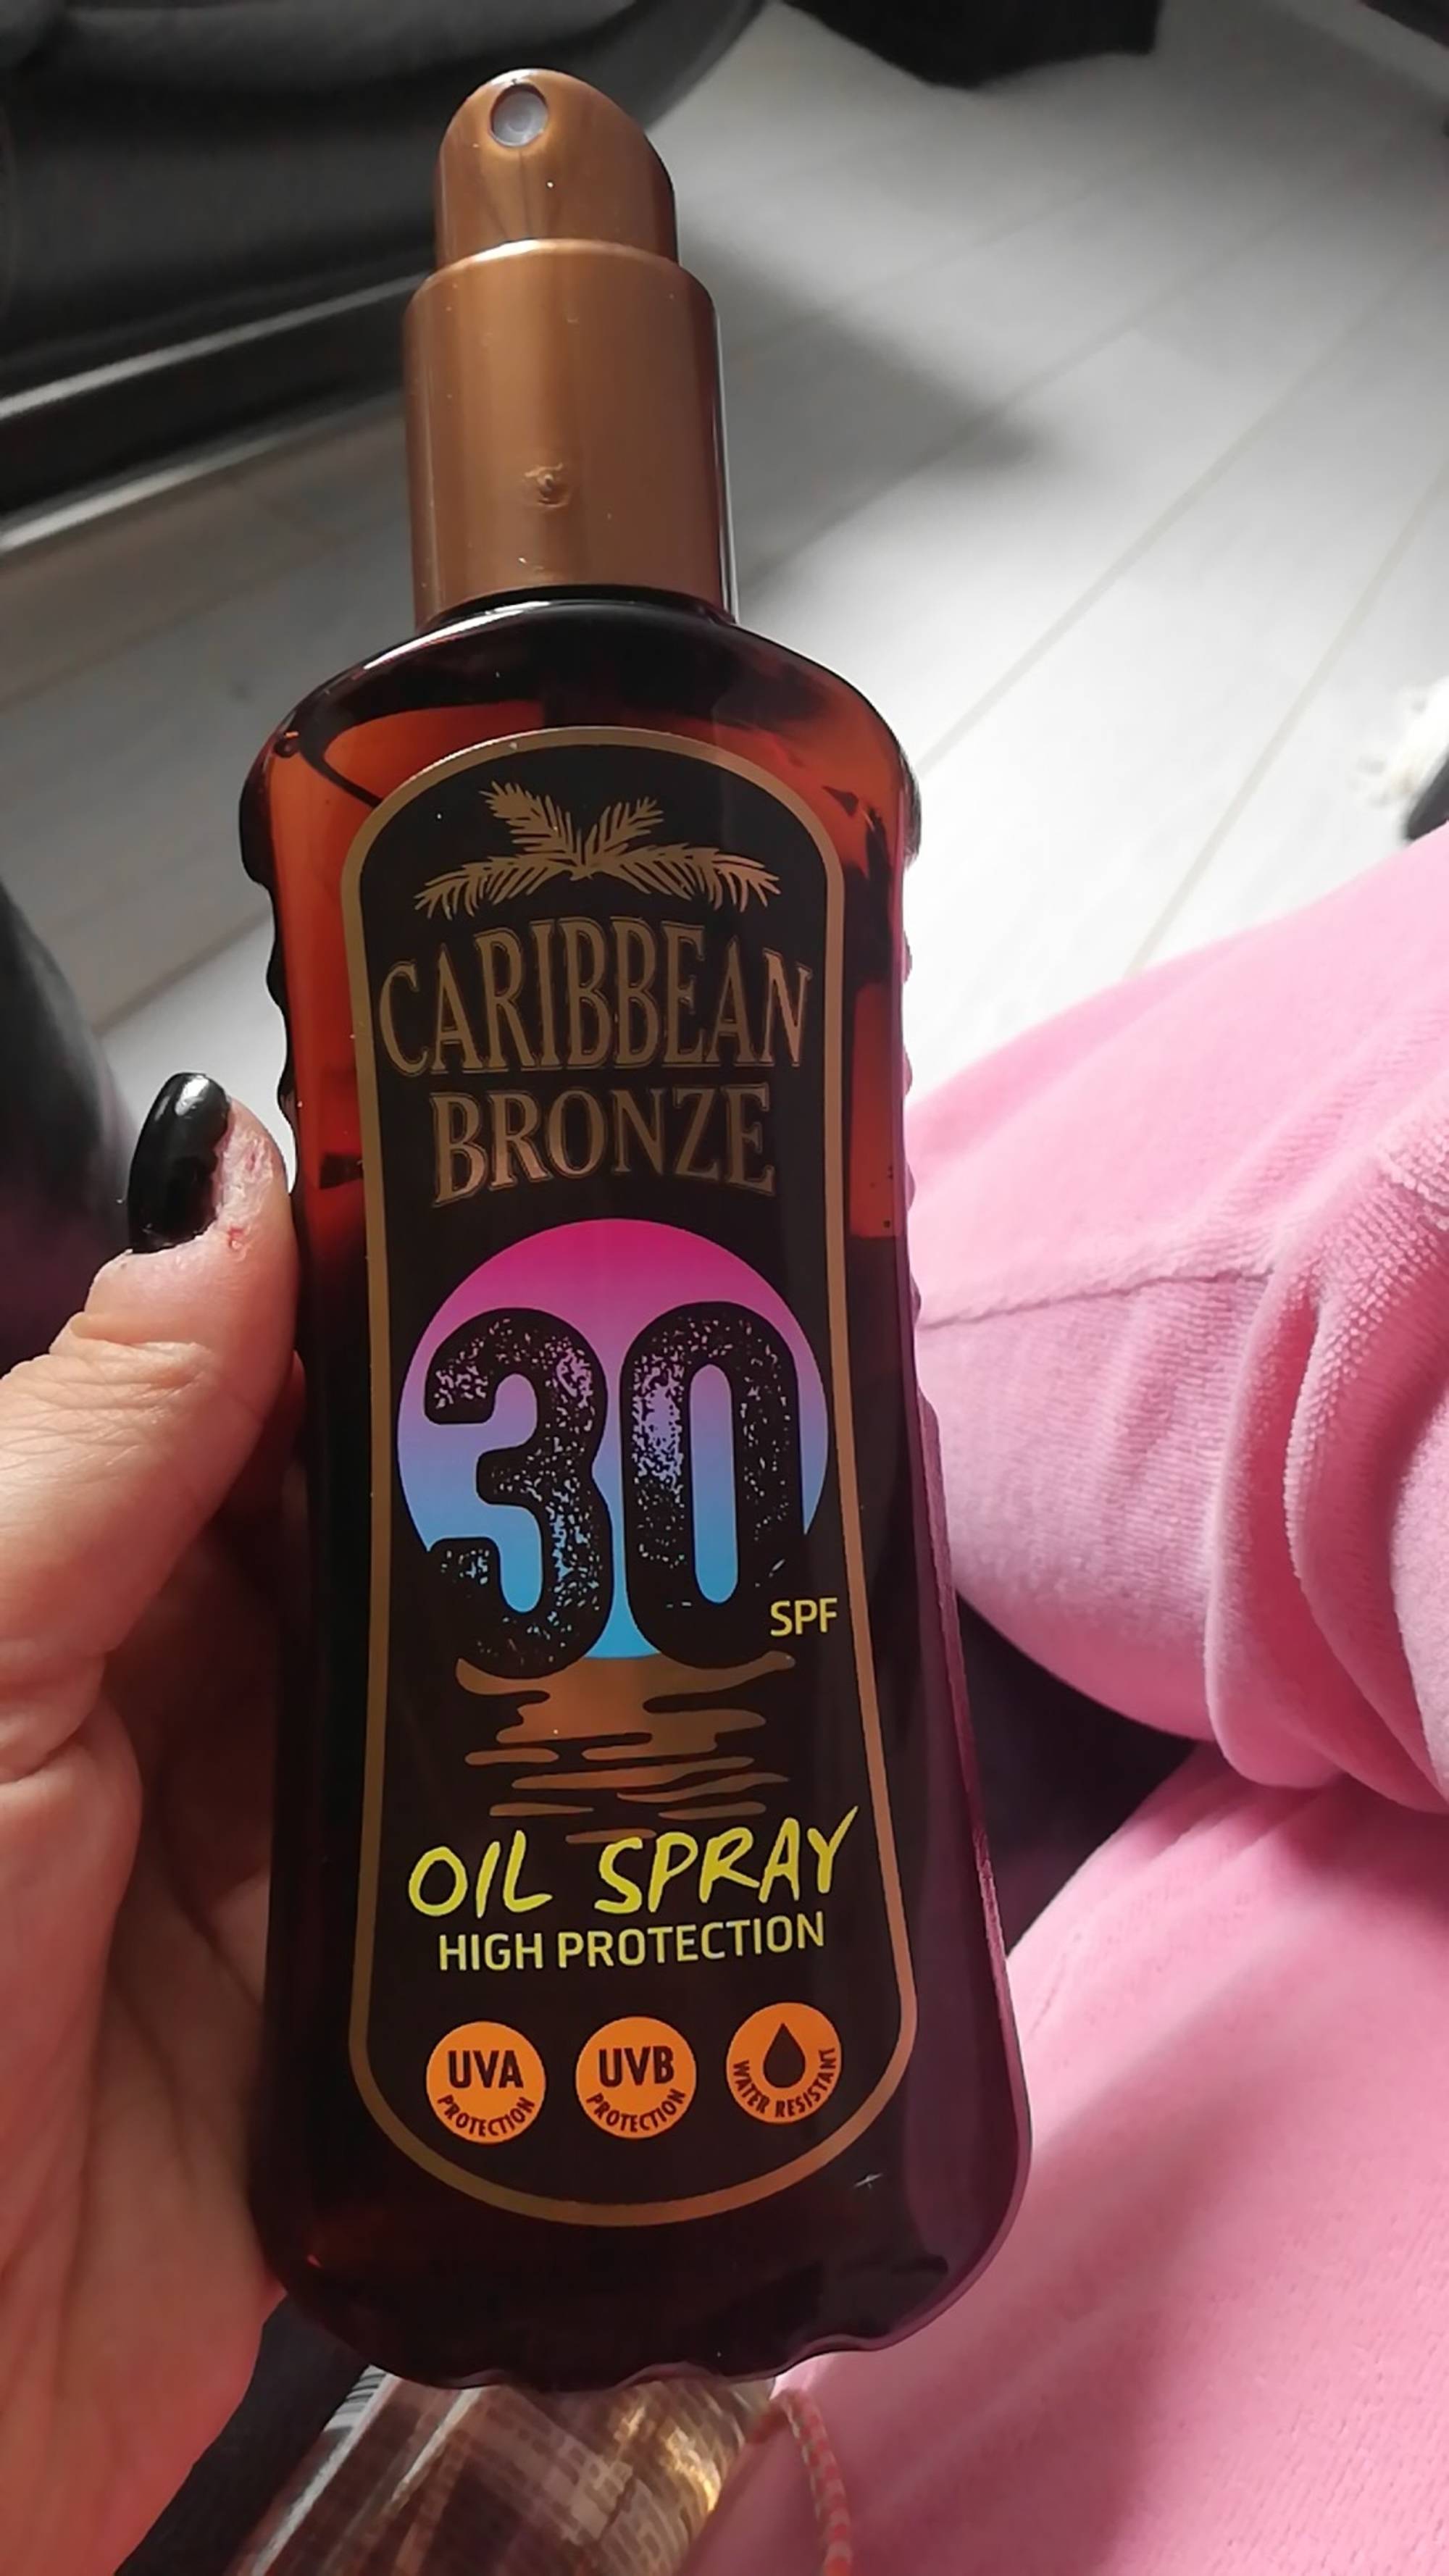 CARIBBEAN BRONZE - Oil spray high protection 30 SPF